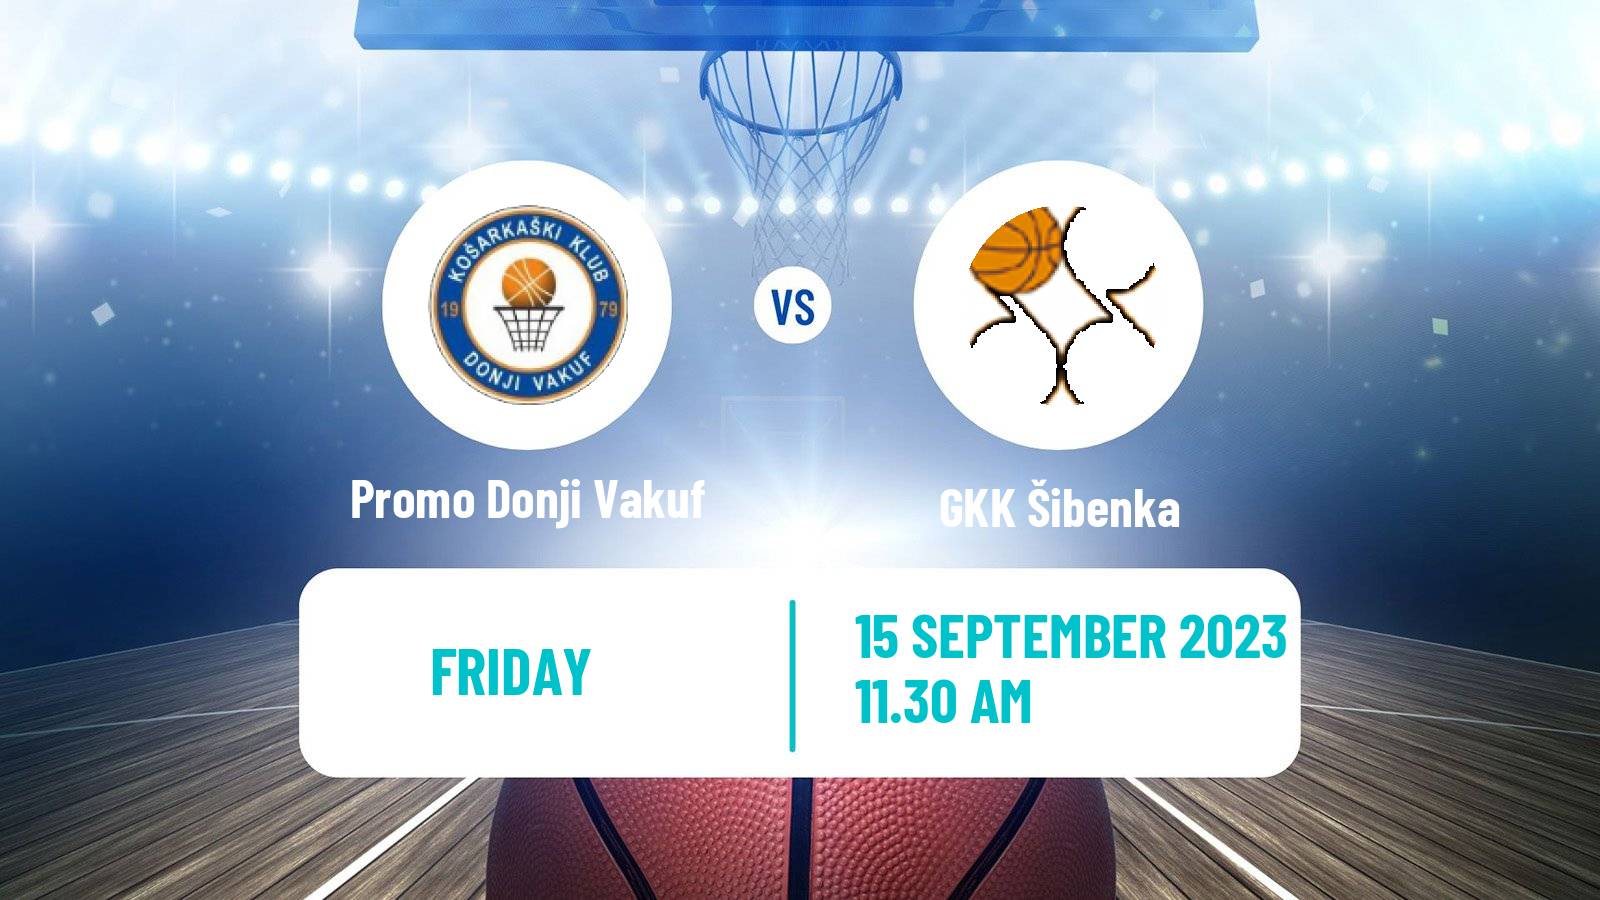 Basketball Club Friendly Basketball Promo Donji Vakuf - GKK Šibenka